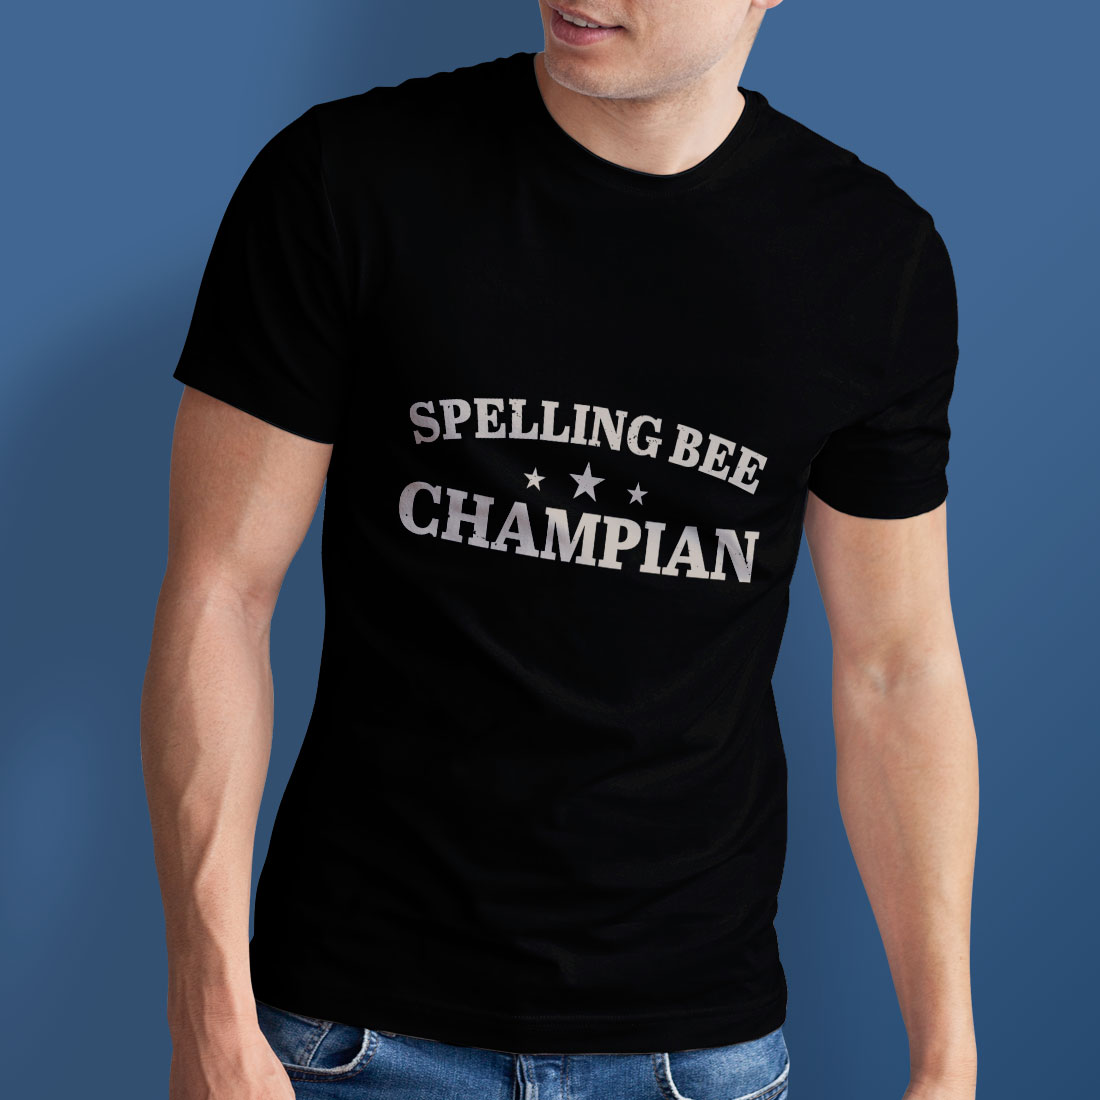 Spelling Bee Champian T-Shirt for Men